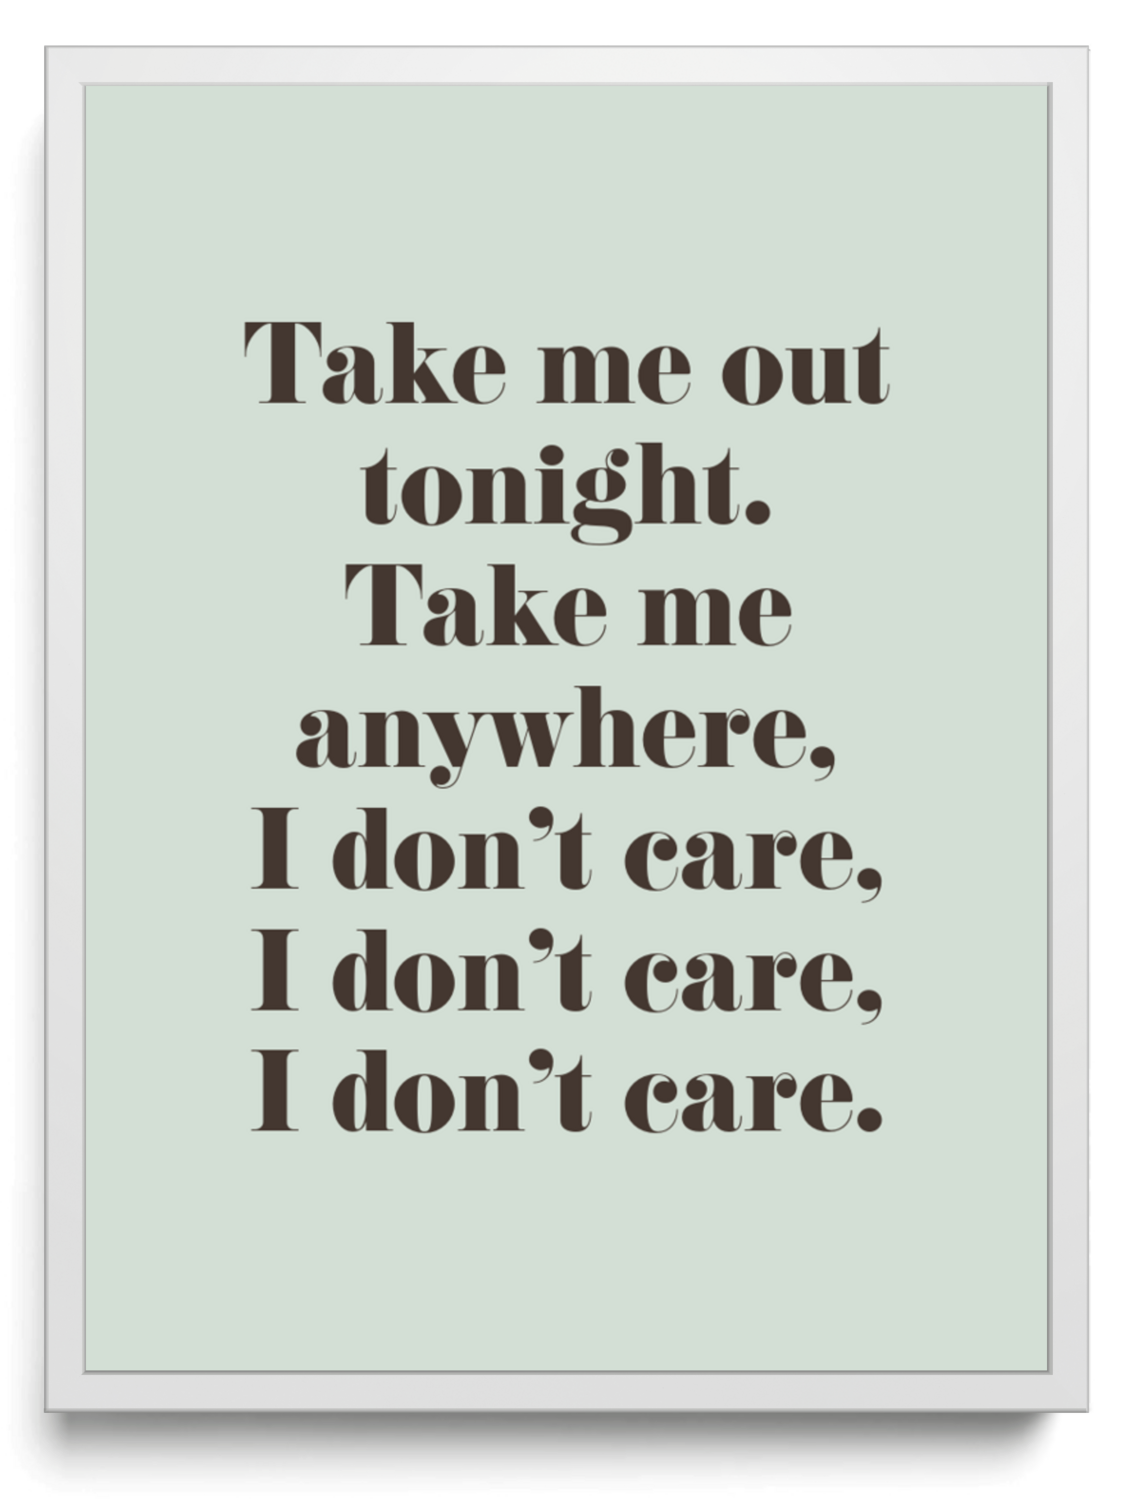 Take me out tonight Take me anywhere I dont care I dont care I dont care framed typographic print